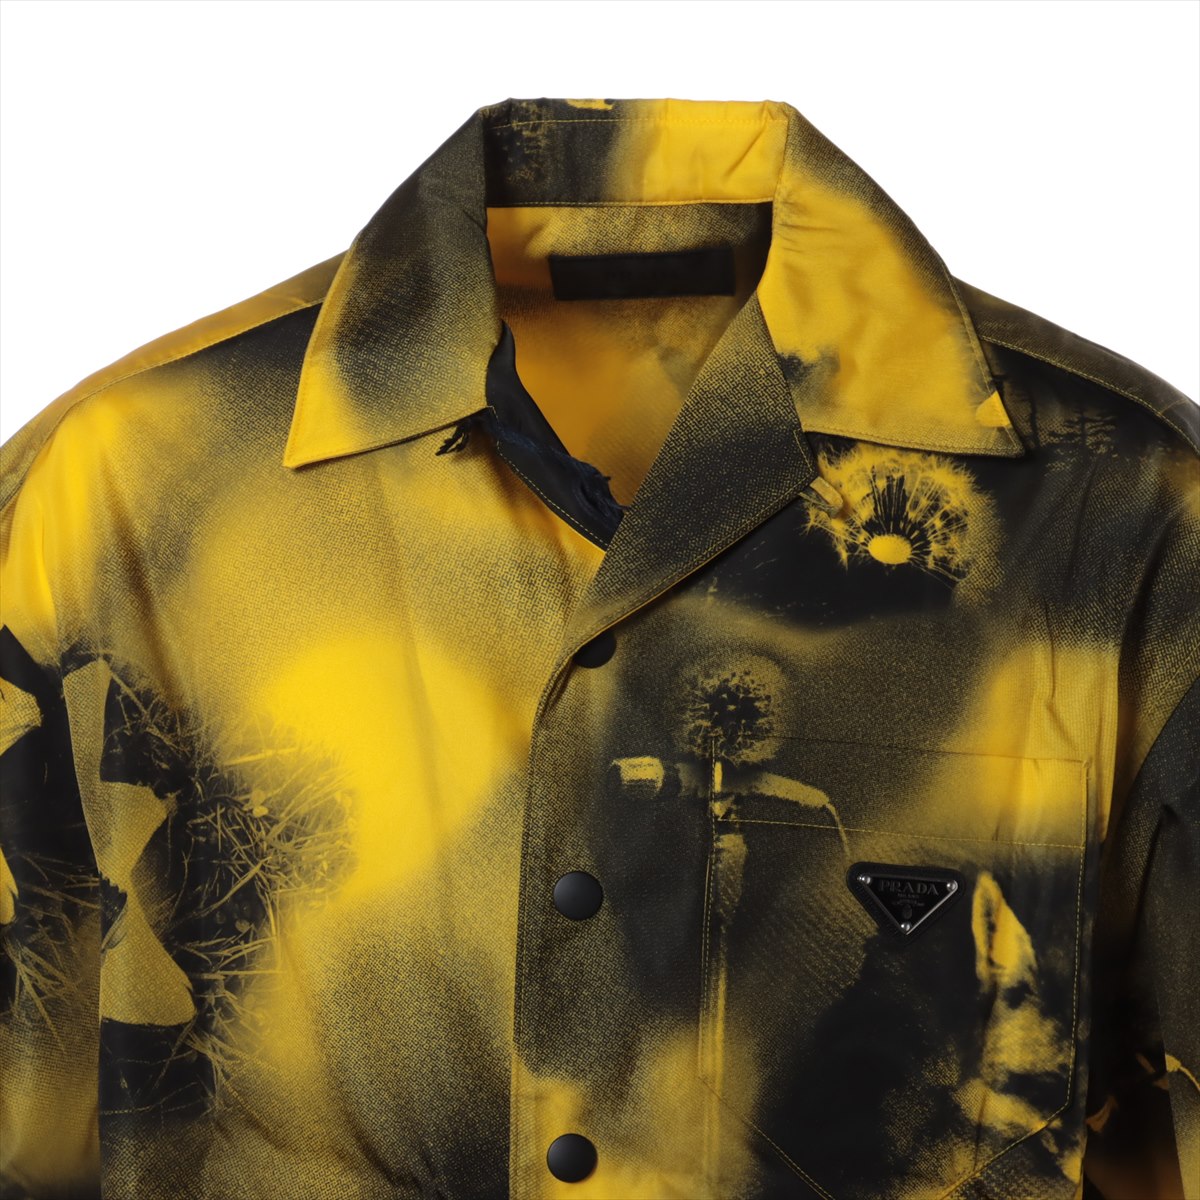 Prada Short Sleeved Printed Re Nylon Shirt Yellow - MEN from Onu UK